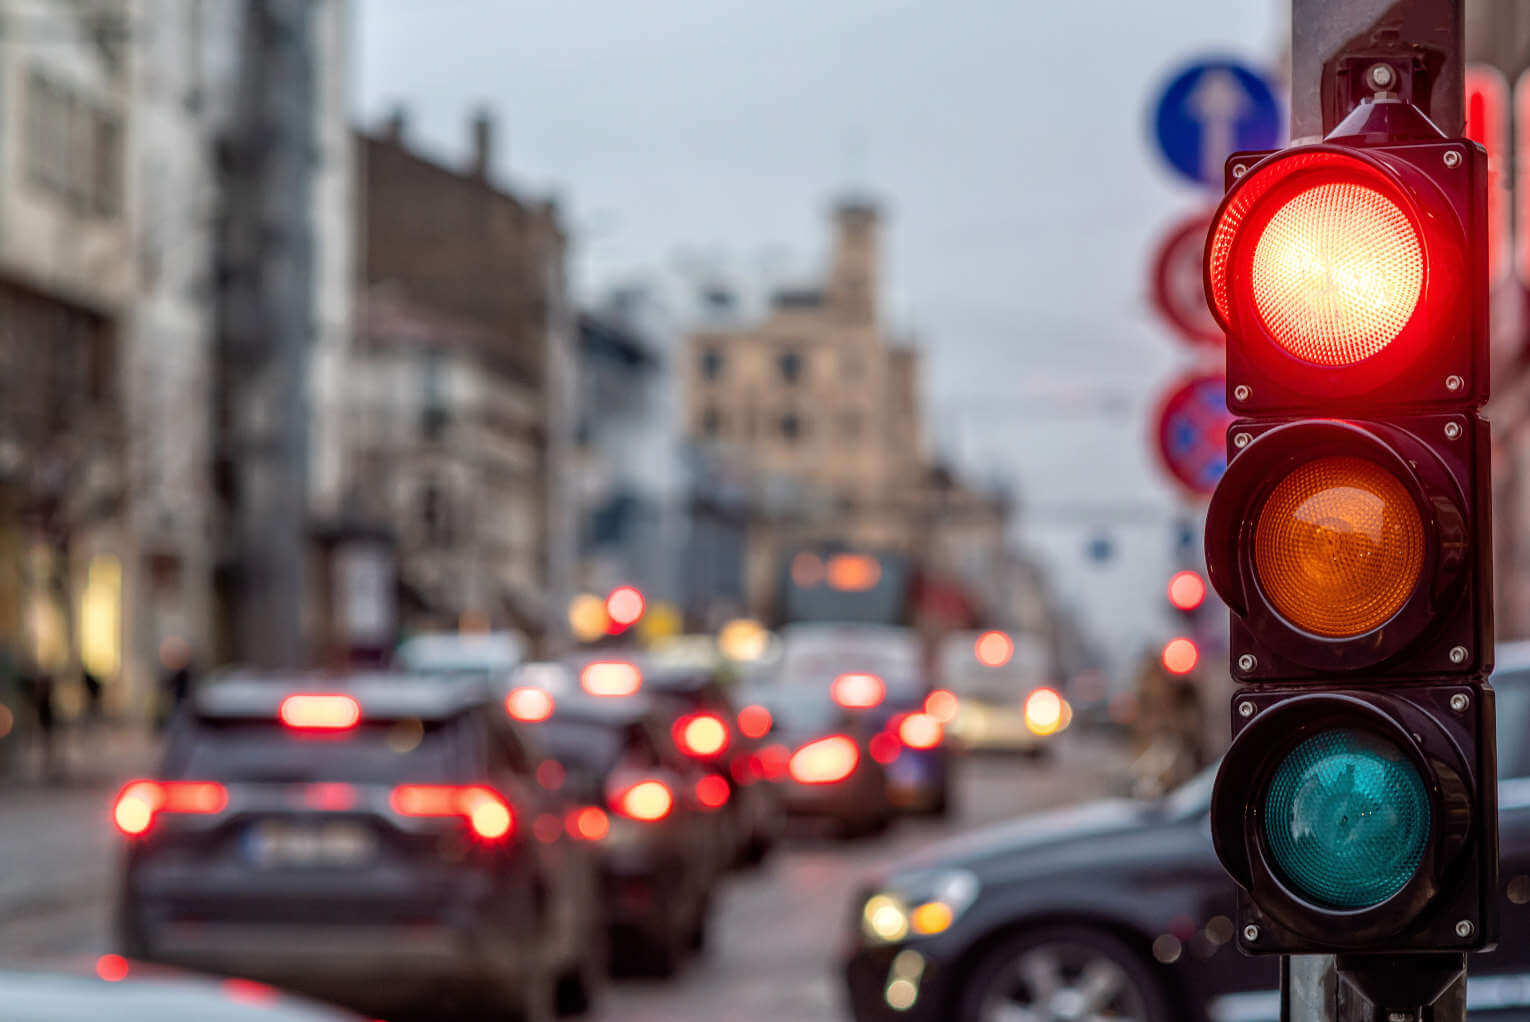 Texas Megachurch Faces Backlash Over Traffic Light Debacle